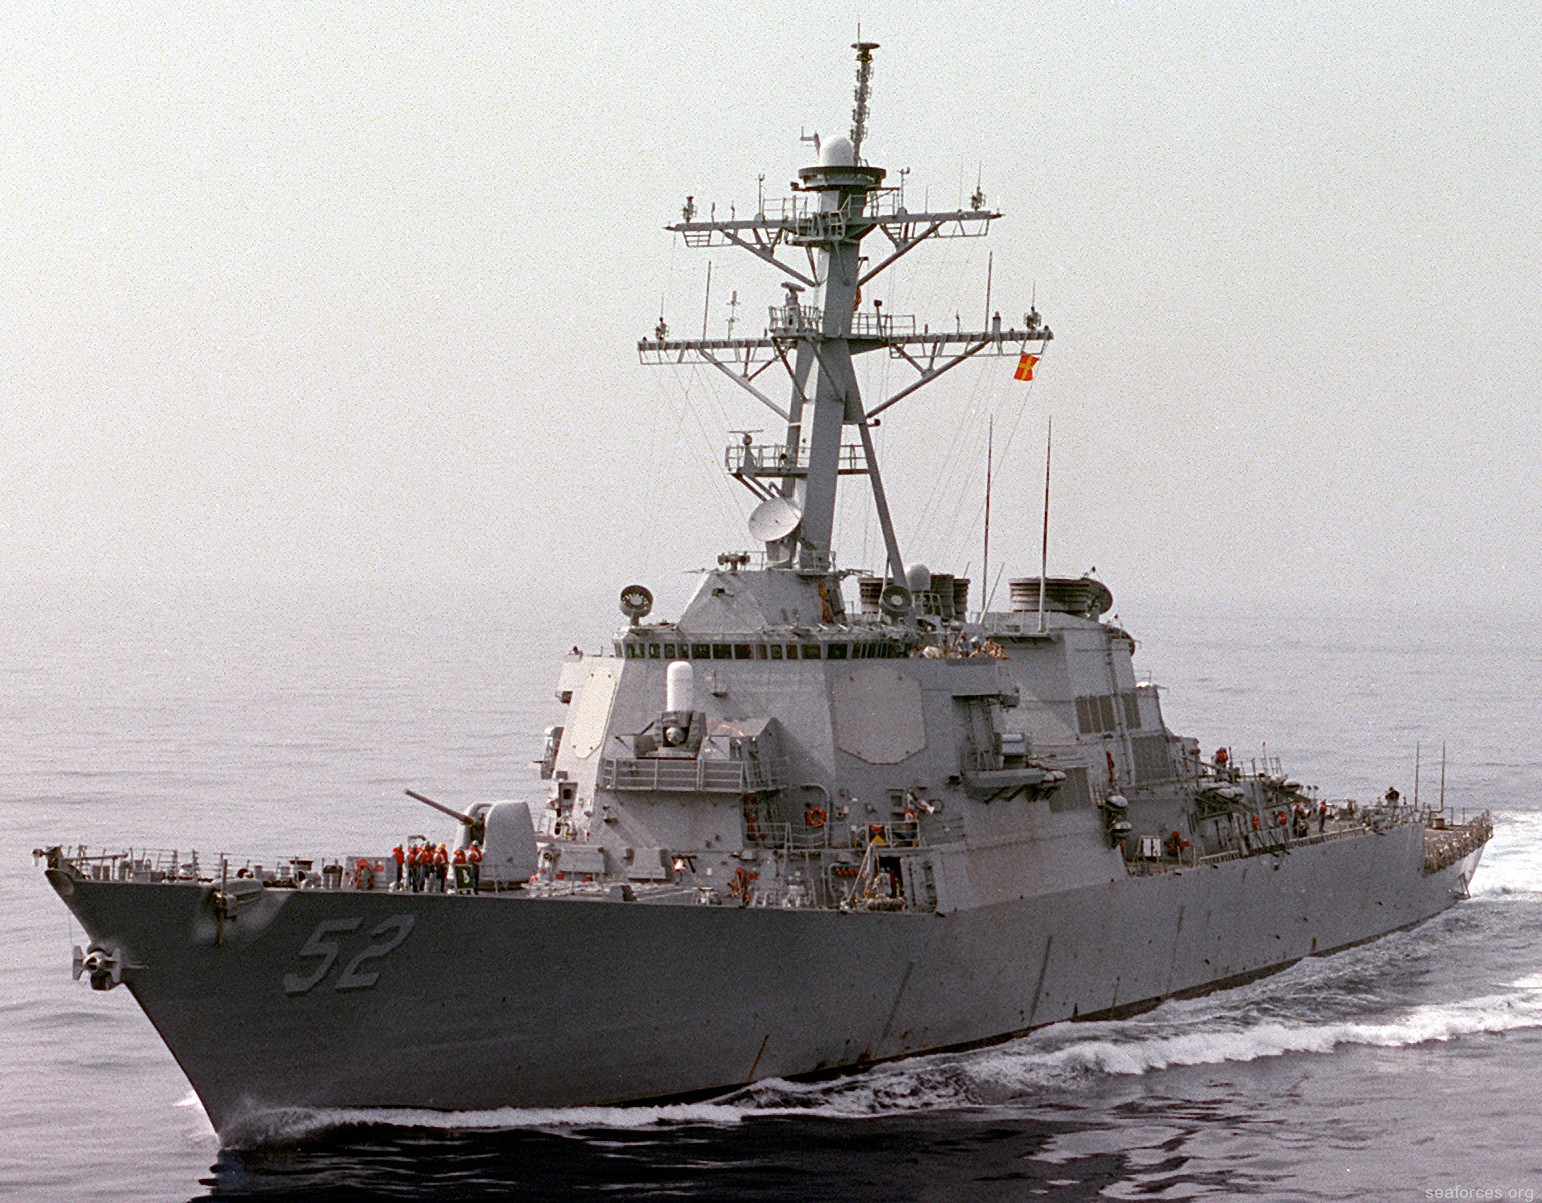 ddg-52 uss barry guided missile destroyer us navy 91